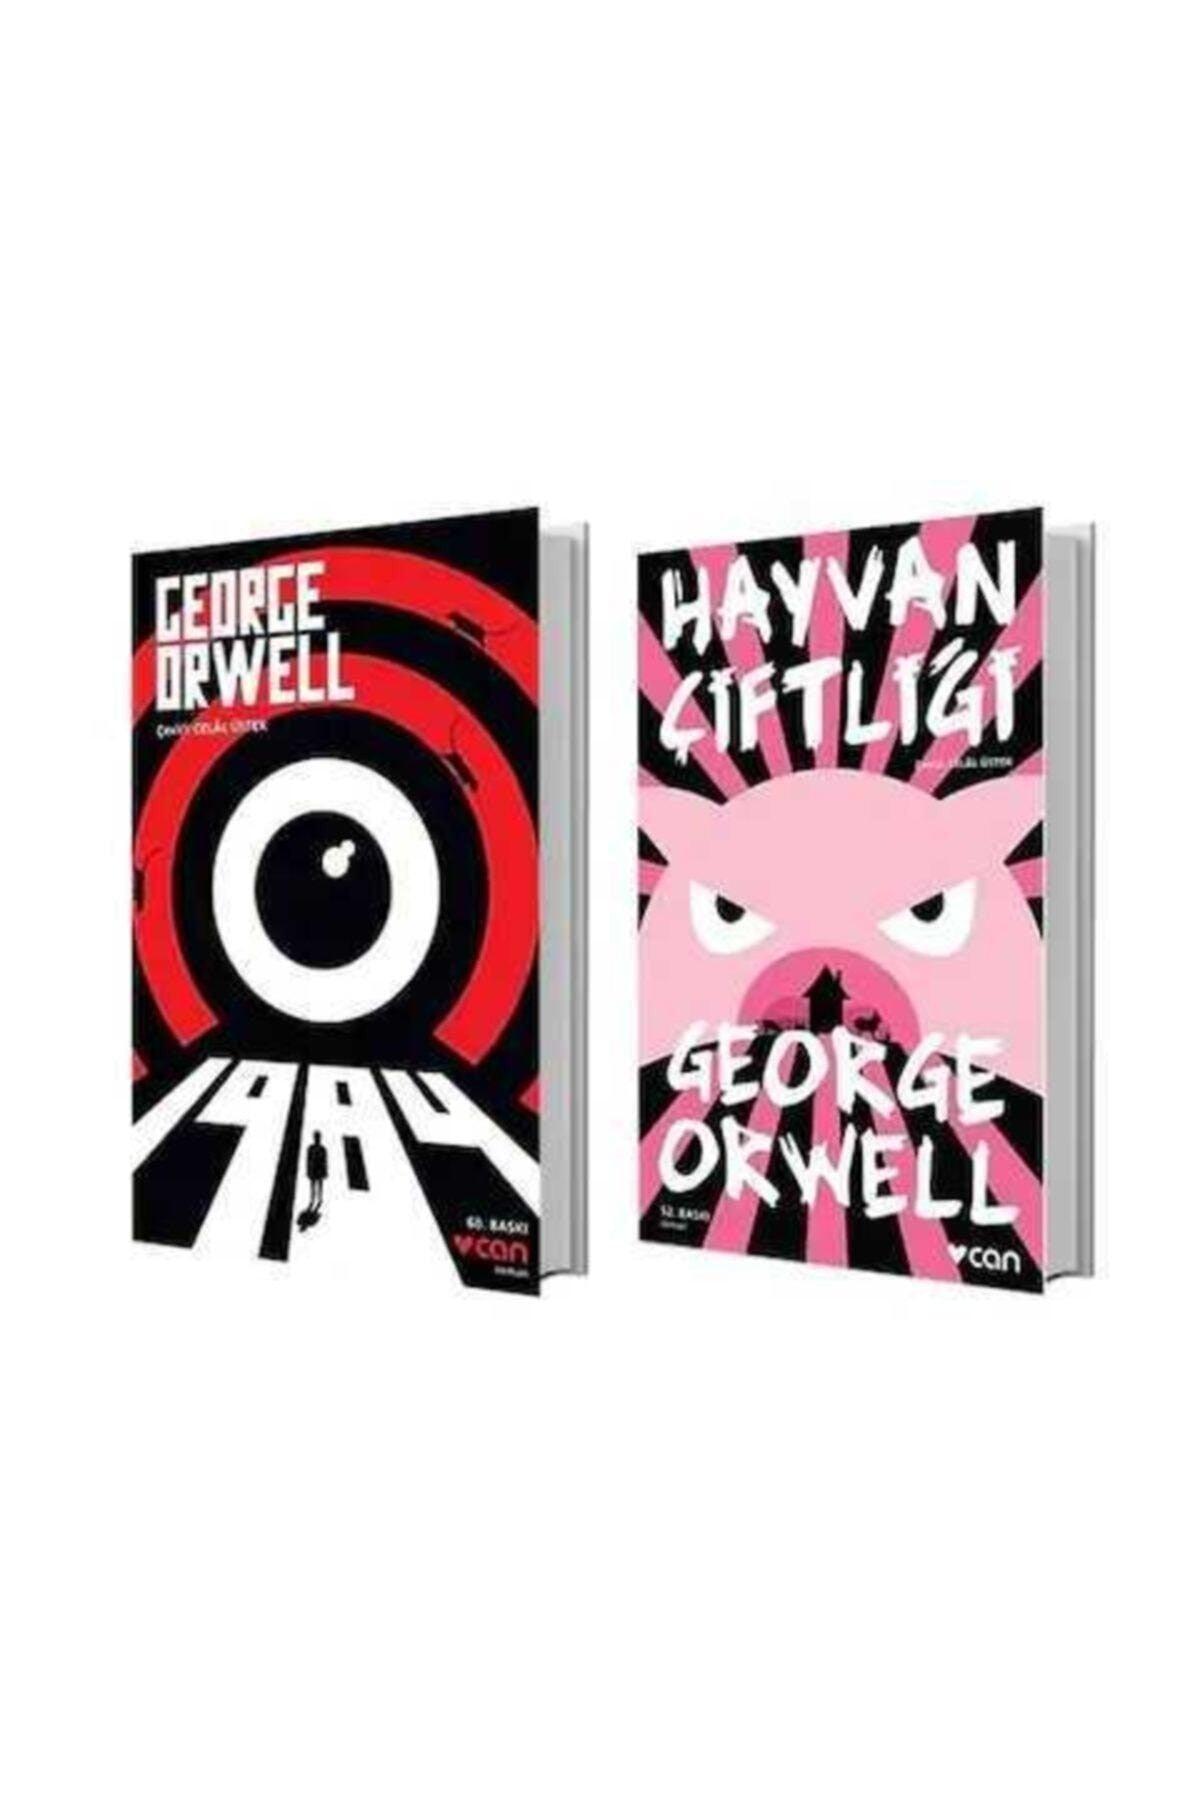 Animal Farm - 1984 - George Orwell 2 Books in One - Swordslife